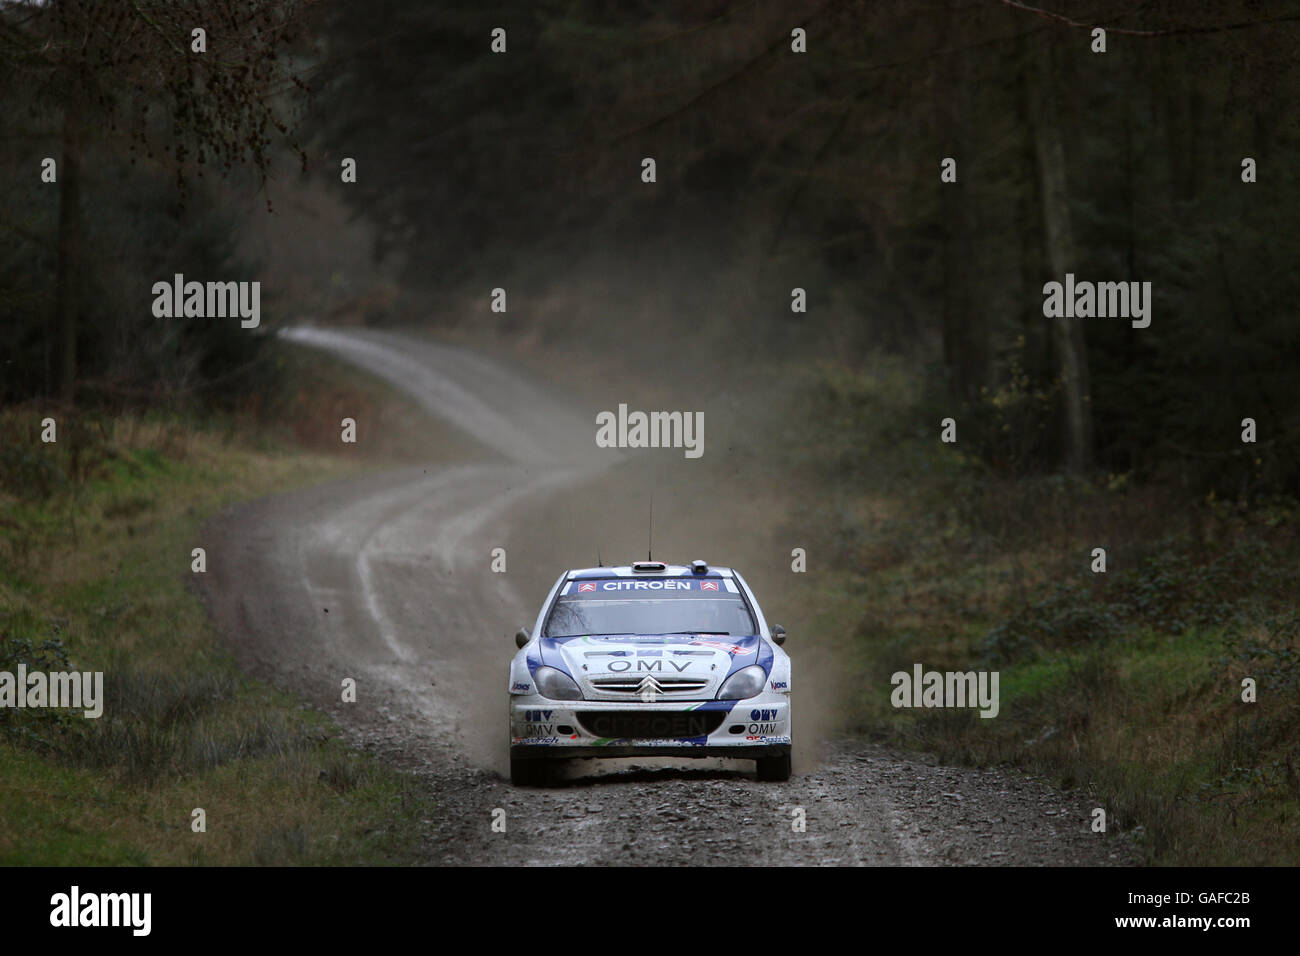 Manfred Stohl de Austria en el OMV Kronos Citroen C4 WRC en el Rallye de Gales GB. Foto de stock